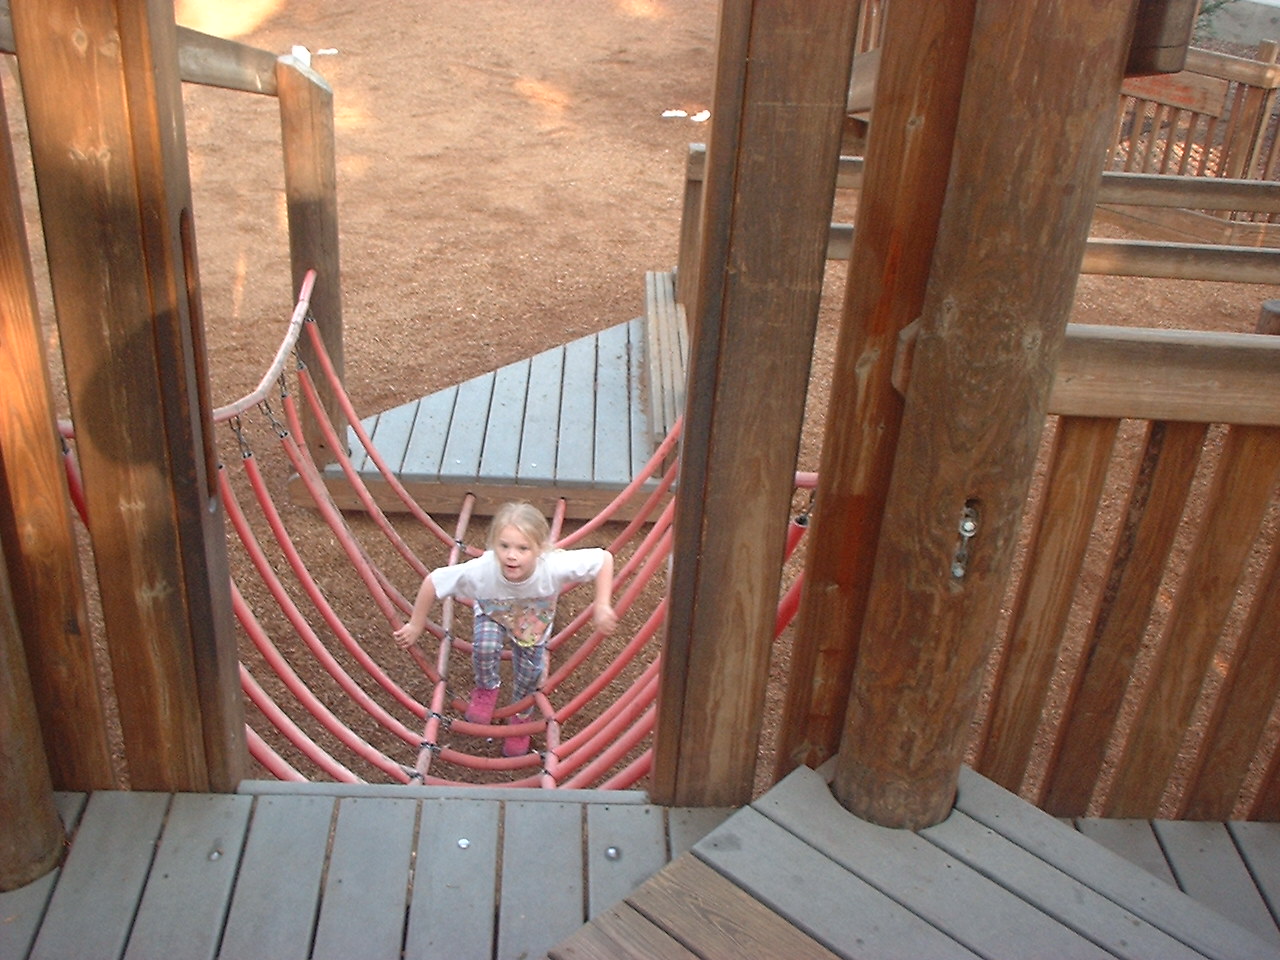 child playing on playground structurek [IMG]